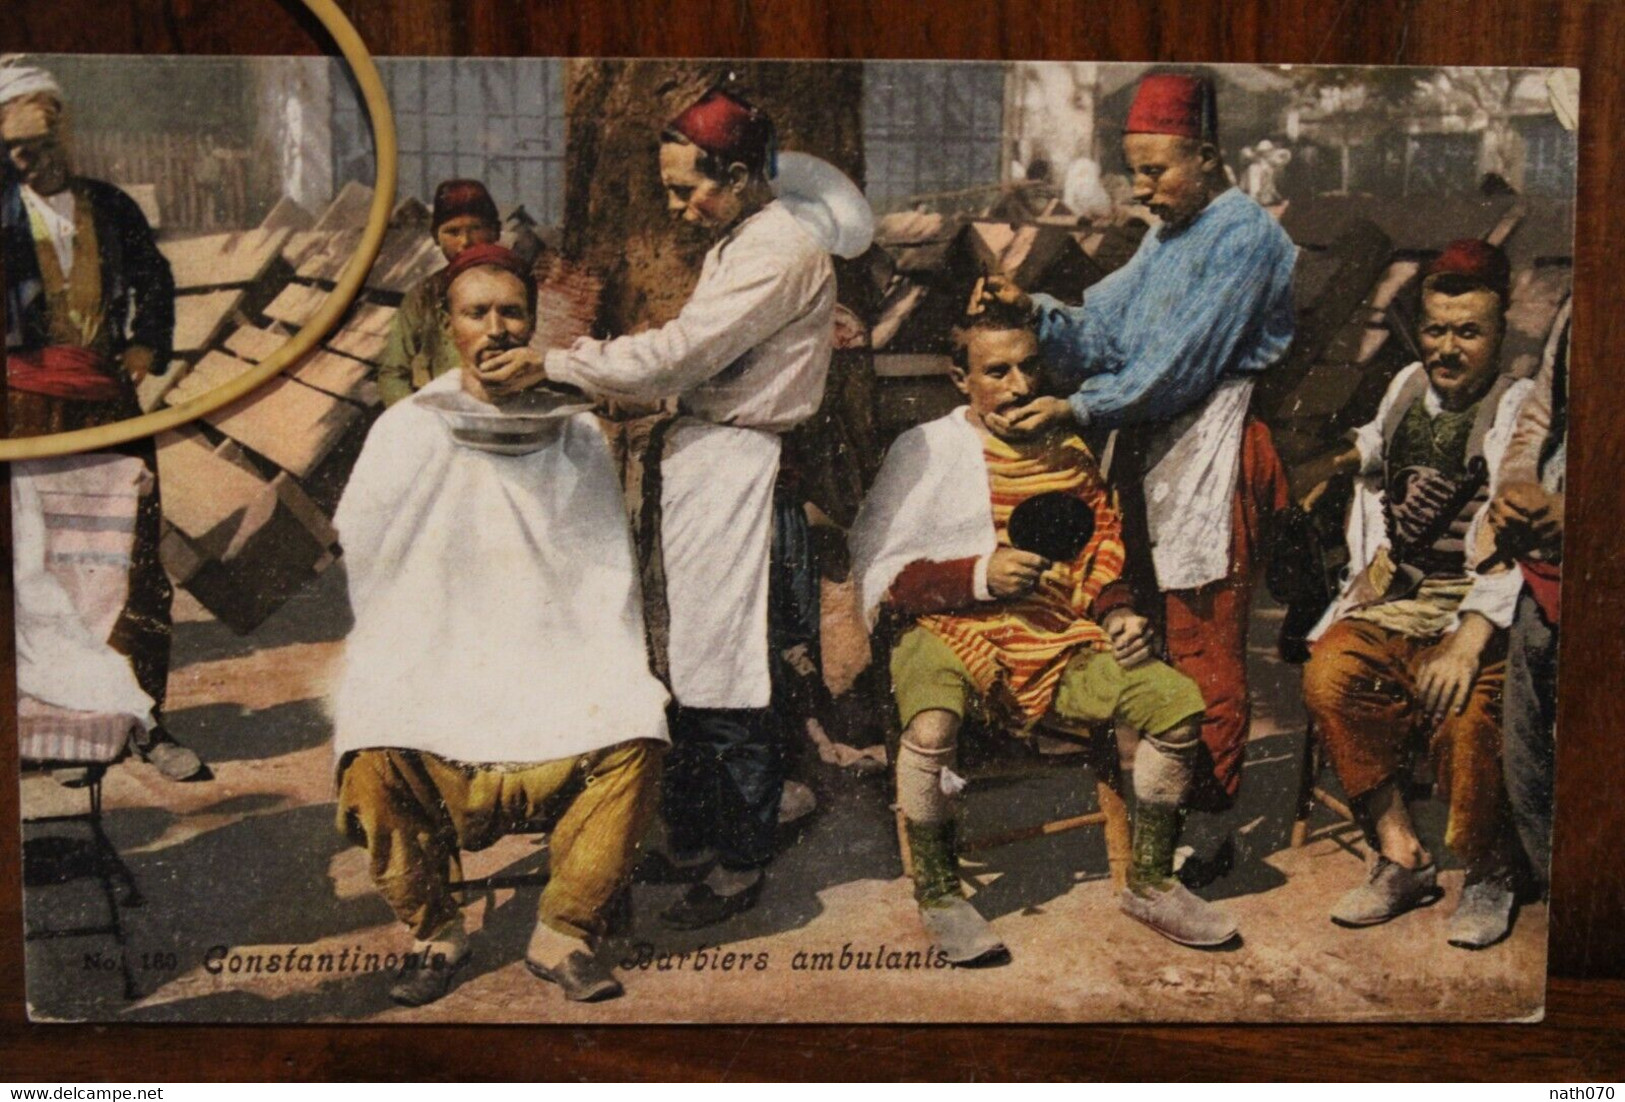 AK 1910 CPA PERA Barbiers Ambulants LEVANT Turkey Empire Ottoman Turkish - Turkey